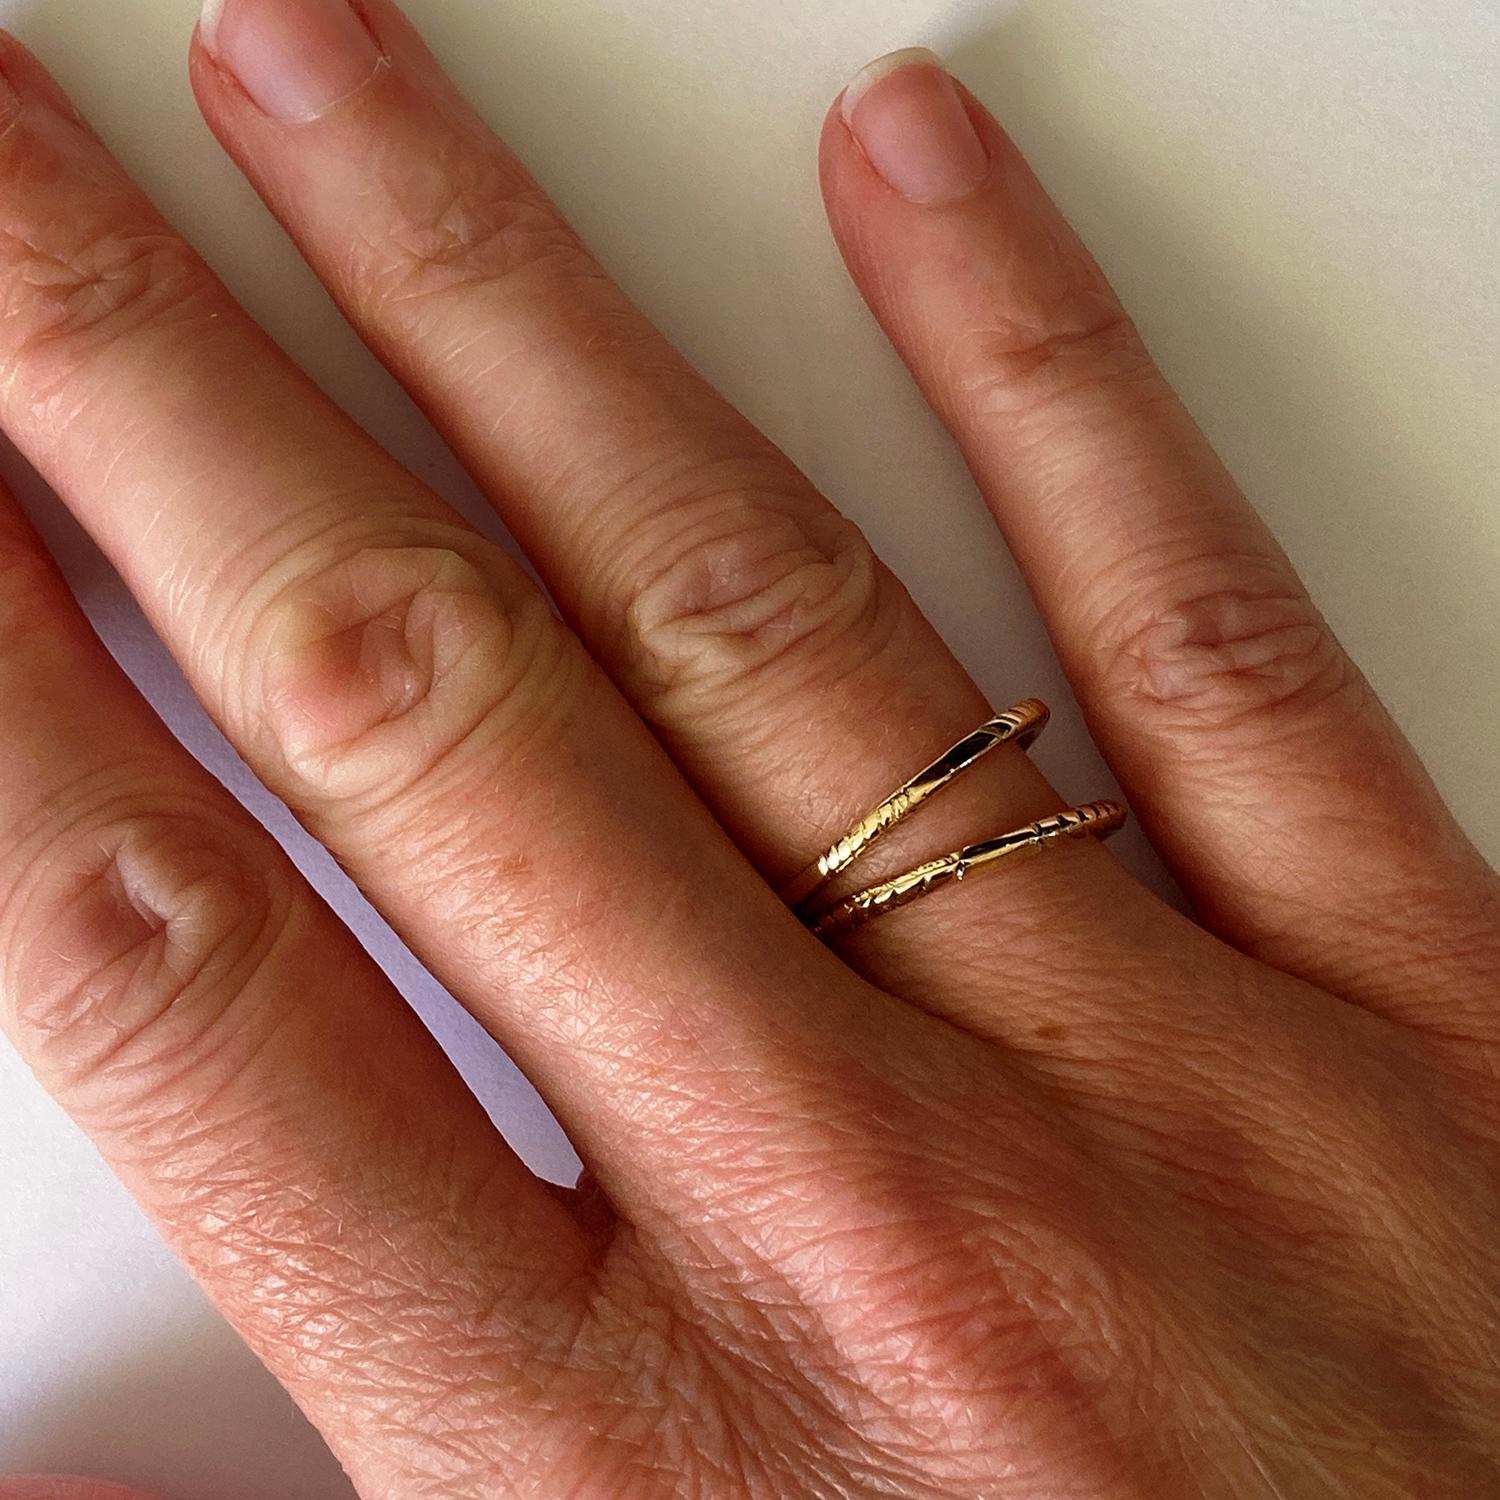 sarah murdoch engagement ring